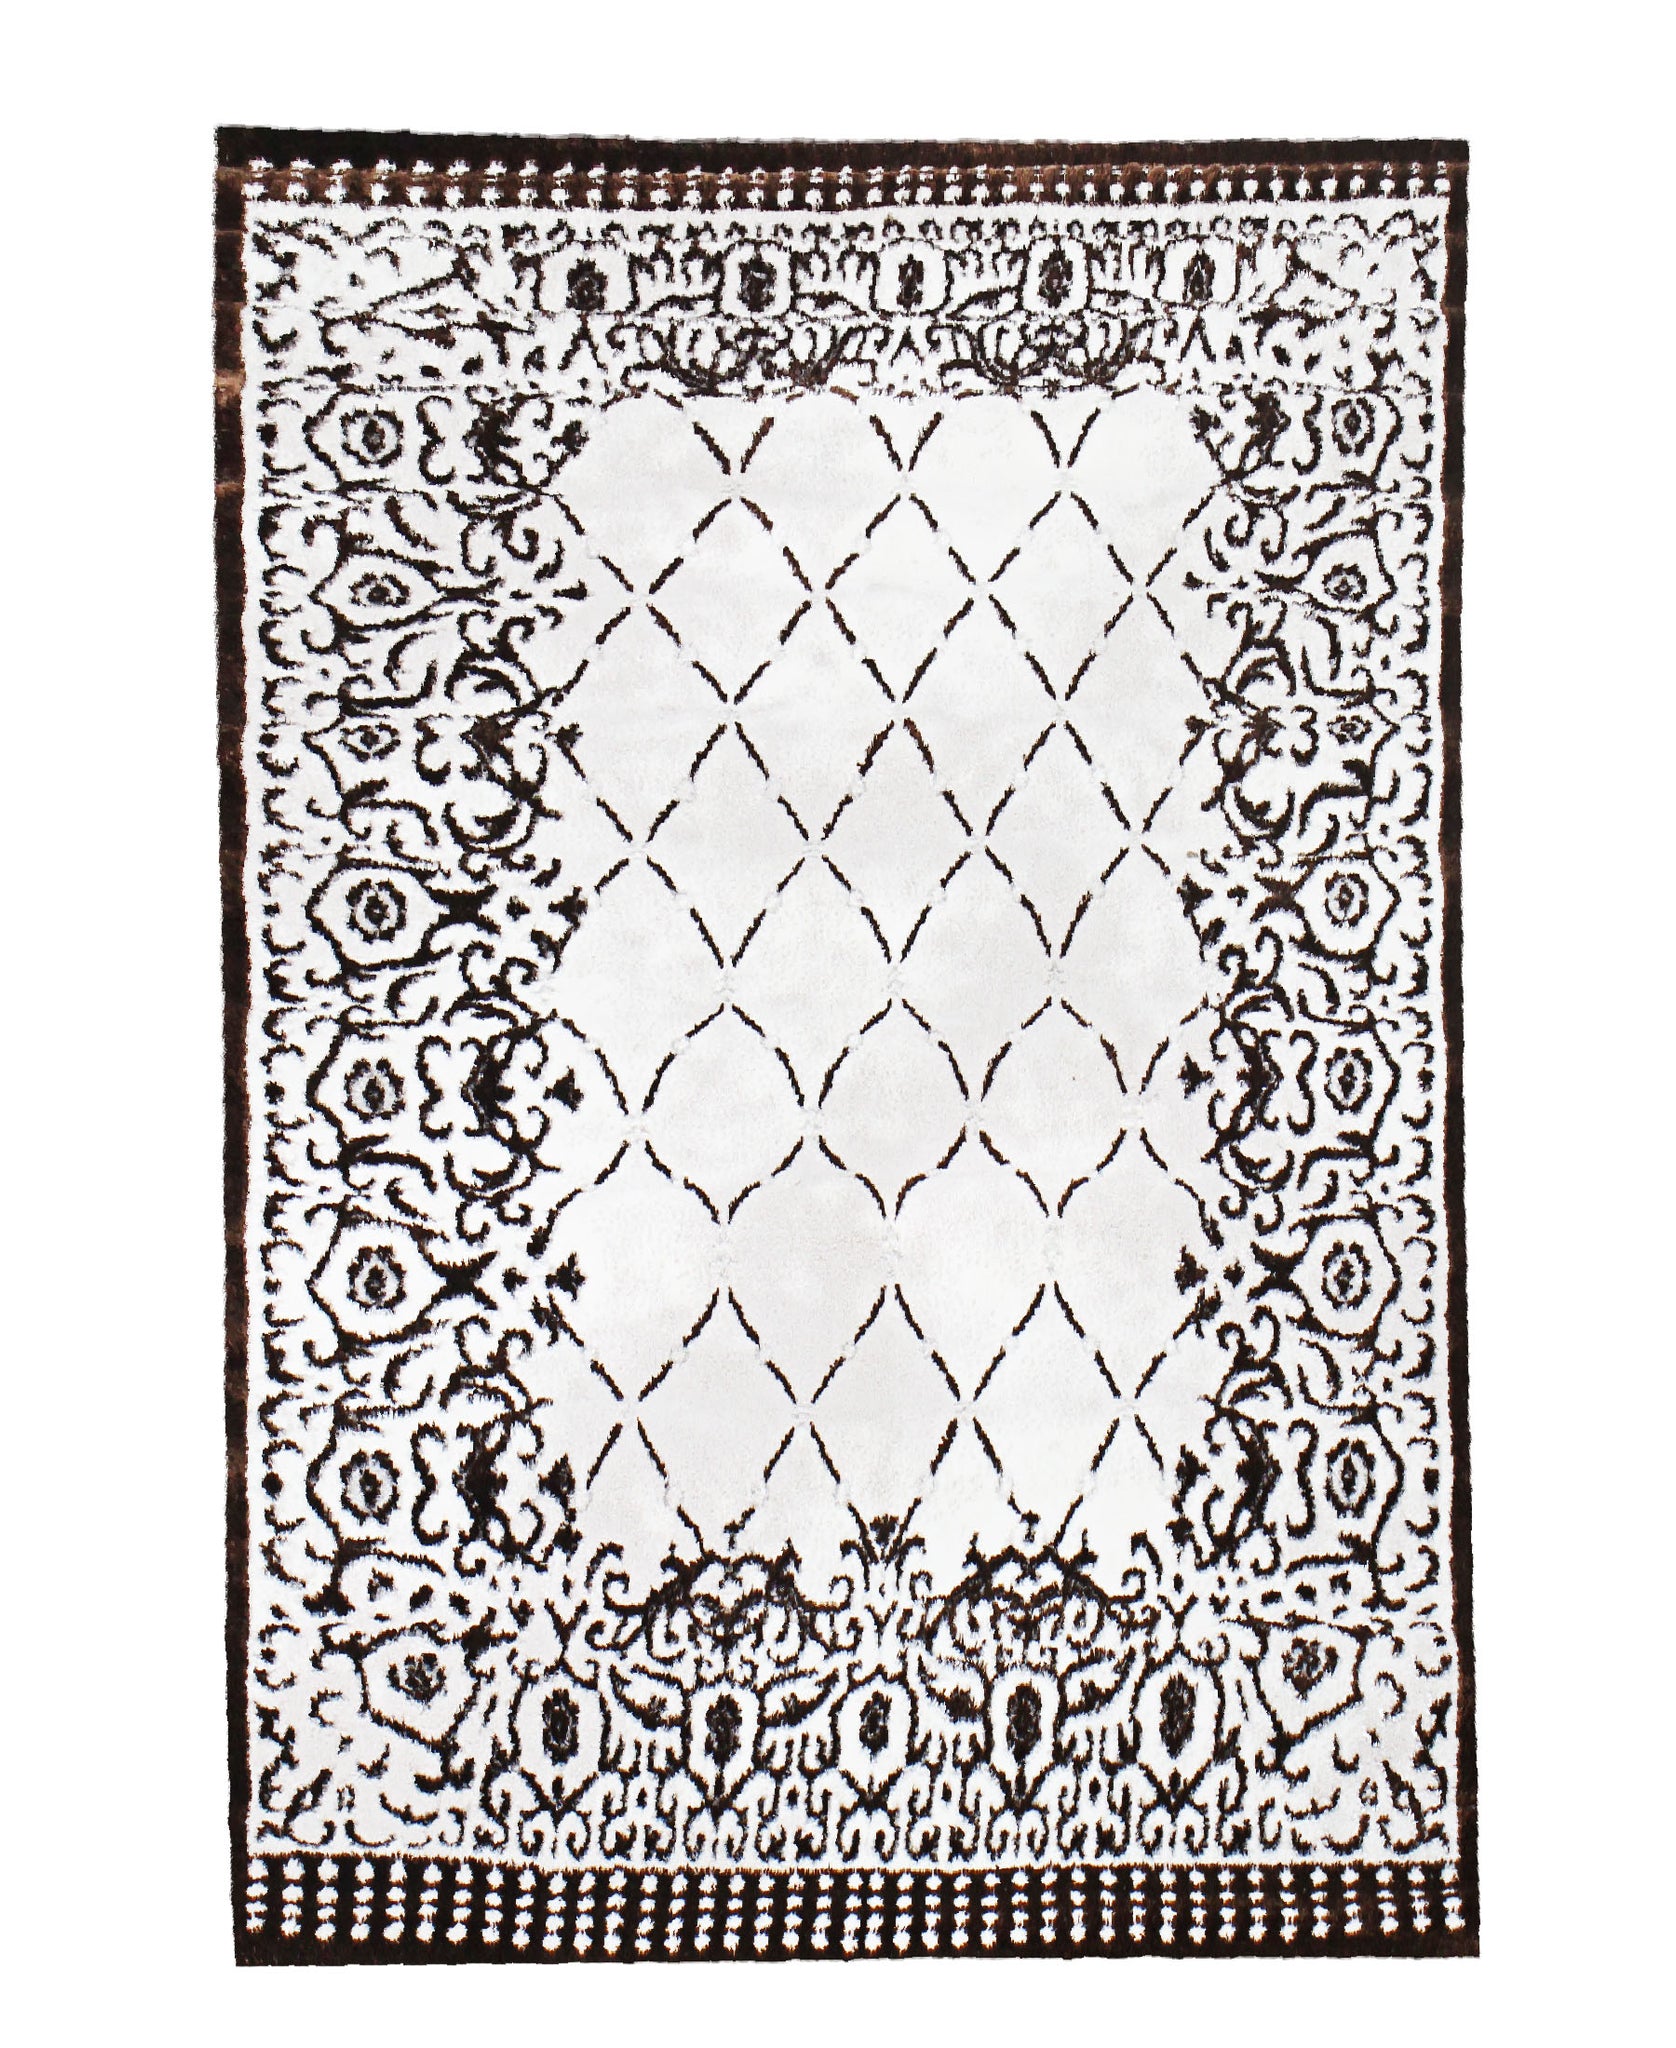 Konya Diamond Carpet 1200mm X 1700mm - Chocolate